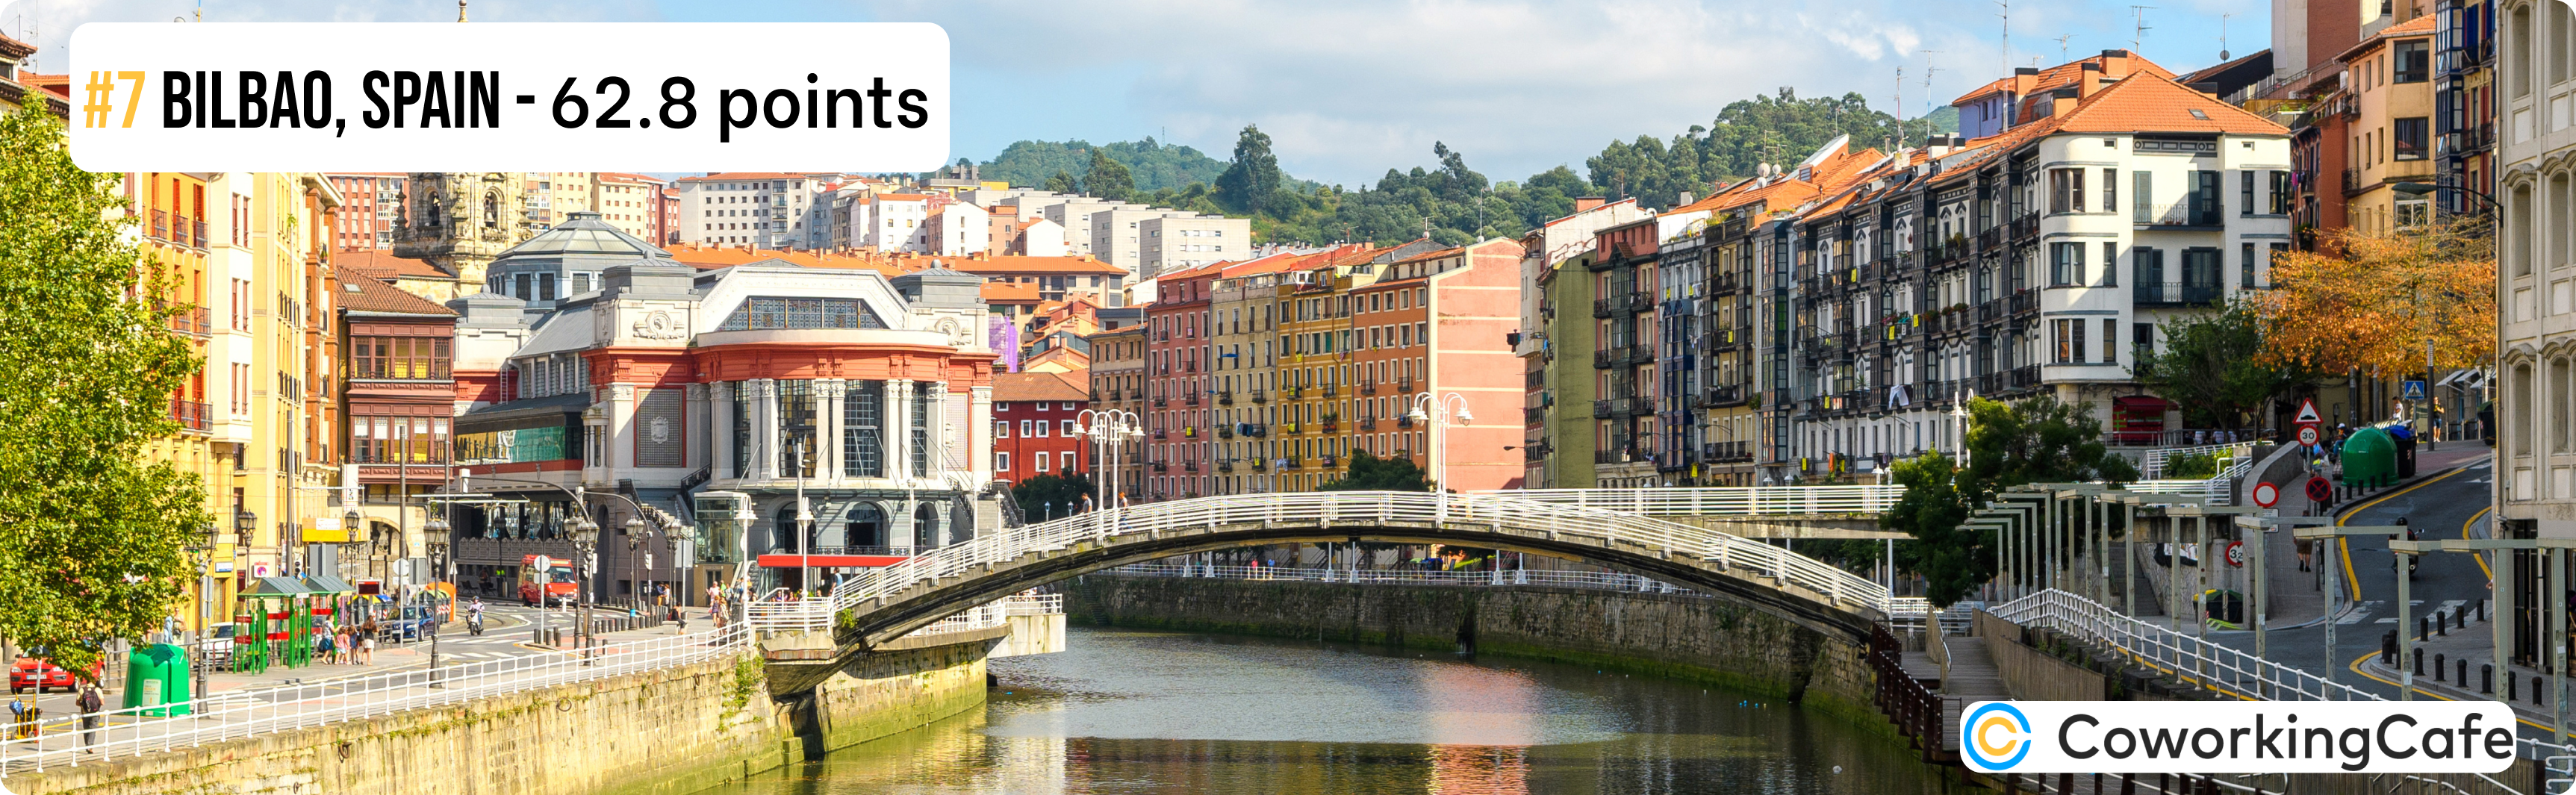 Bilbao, Spain – Total Points: 62.8